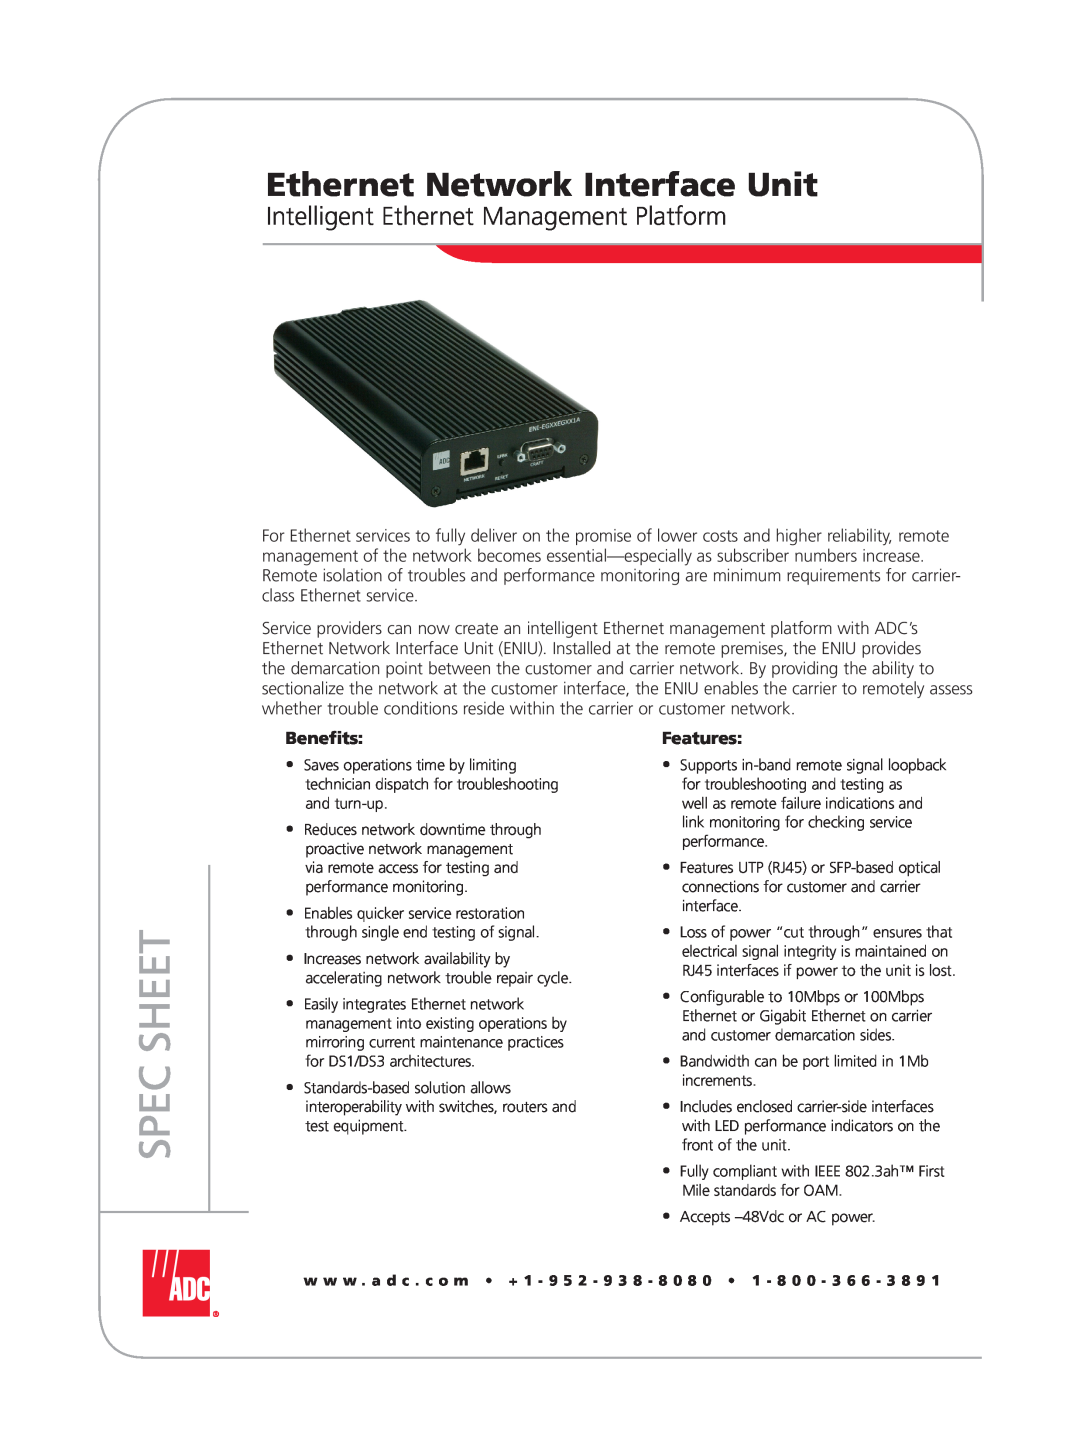 ADC Ethernet Network Interface Unit manual Intelligent Ethernet Management Platform, Spec Sheet, Benefits, Features 